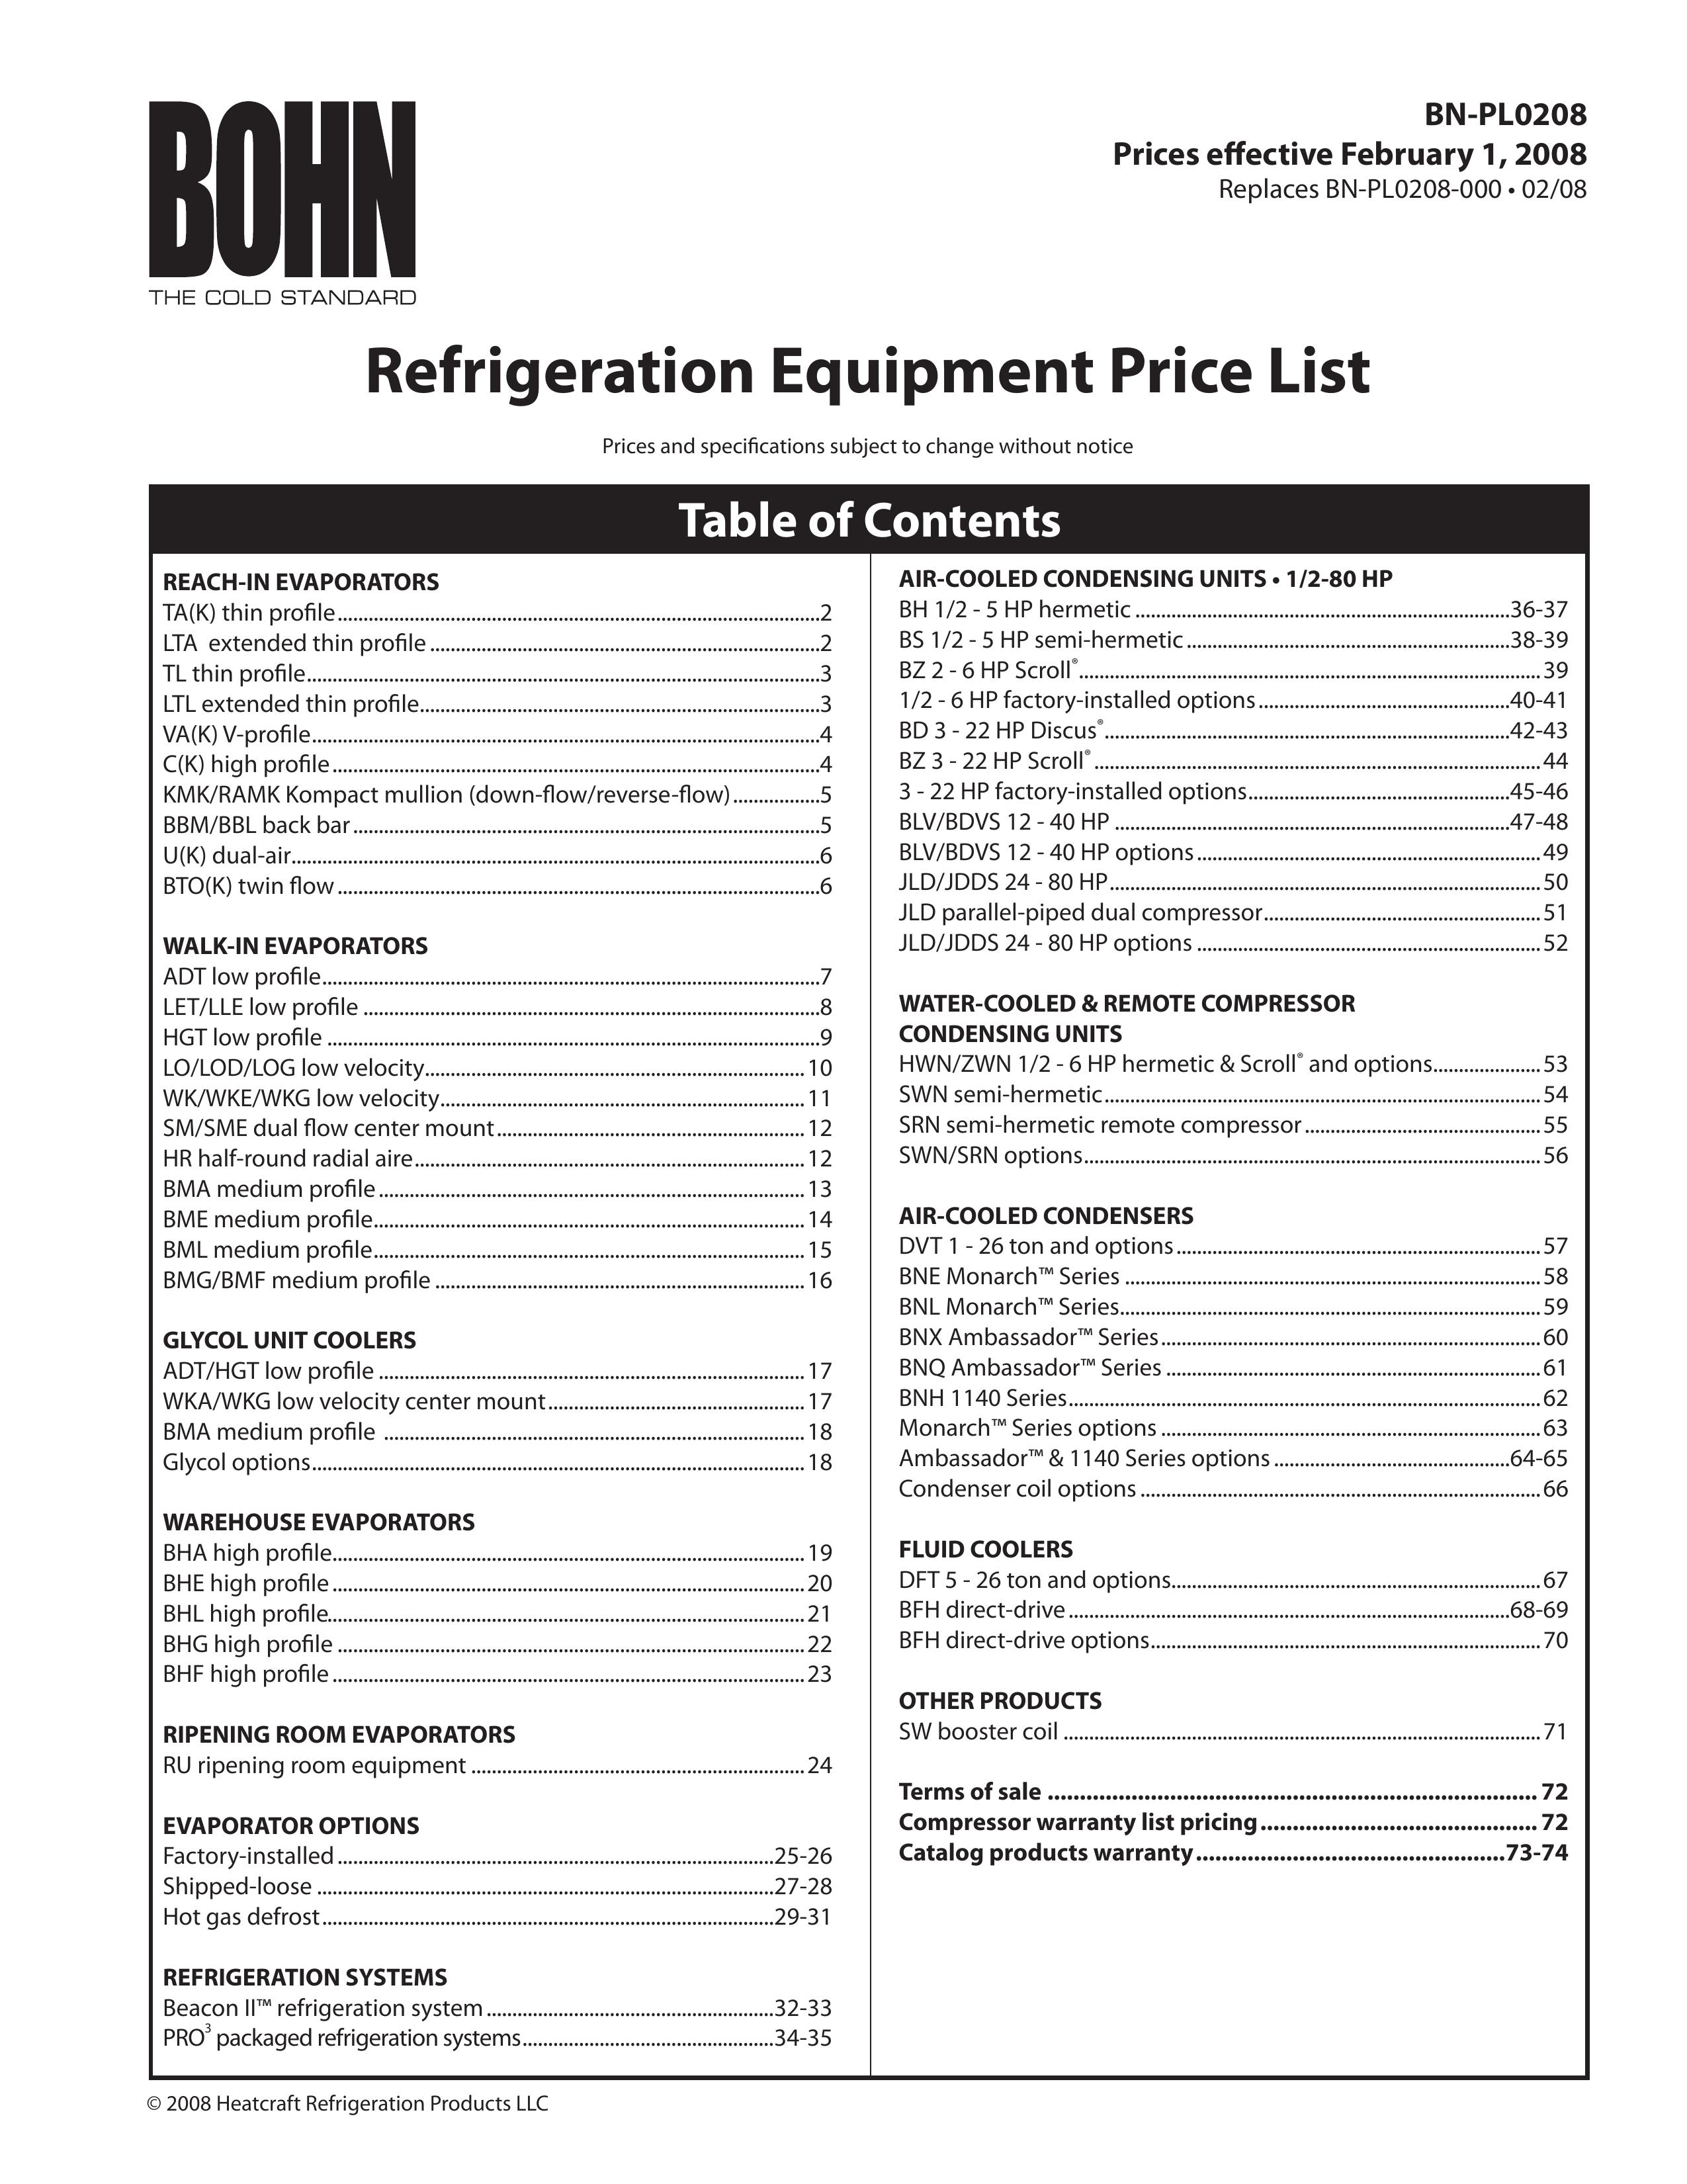 Heatcraft Refrigeration Products BN-PL0208 Refrigerator User Manual